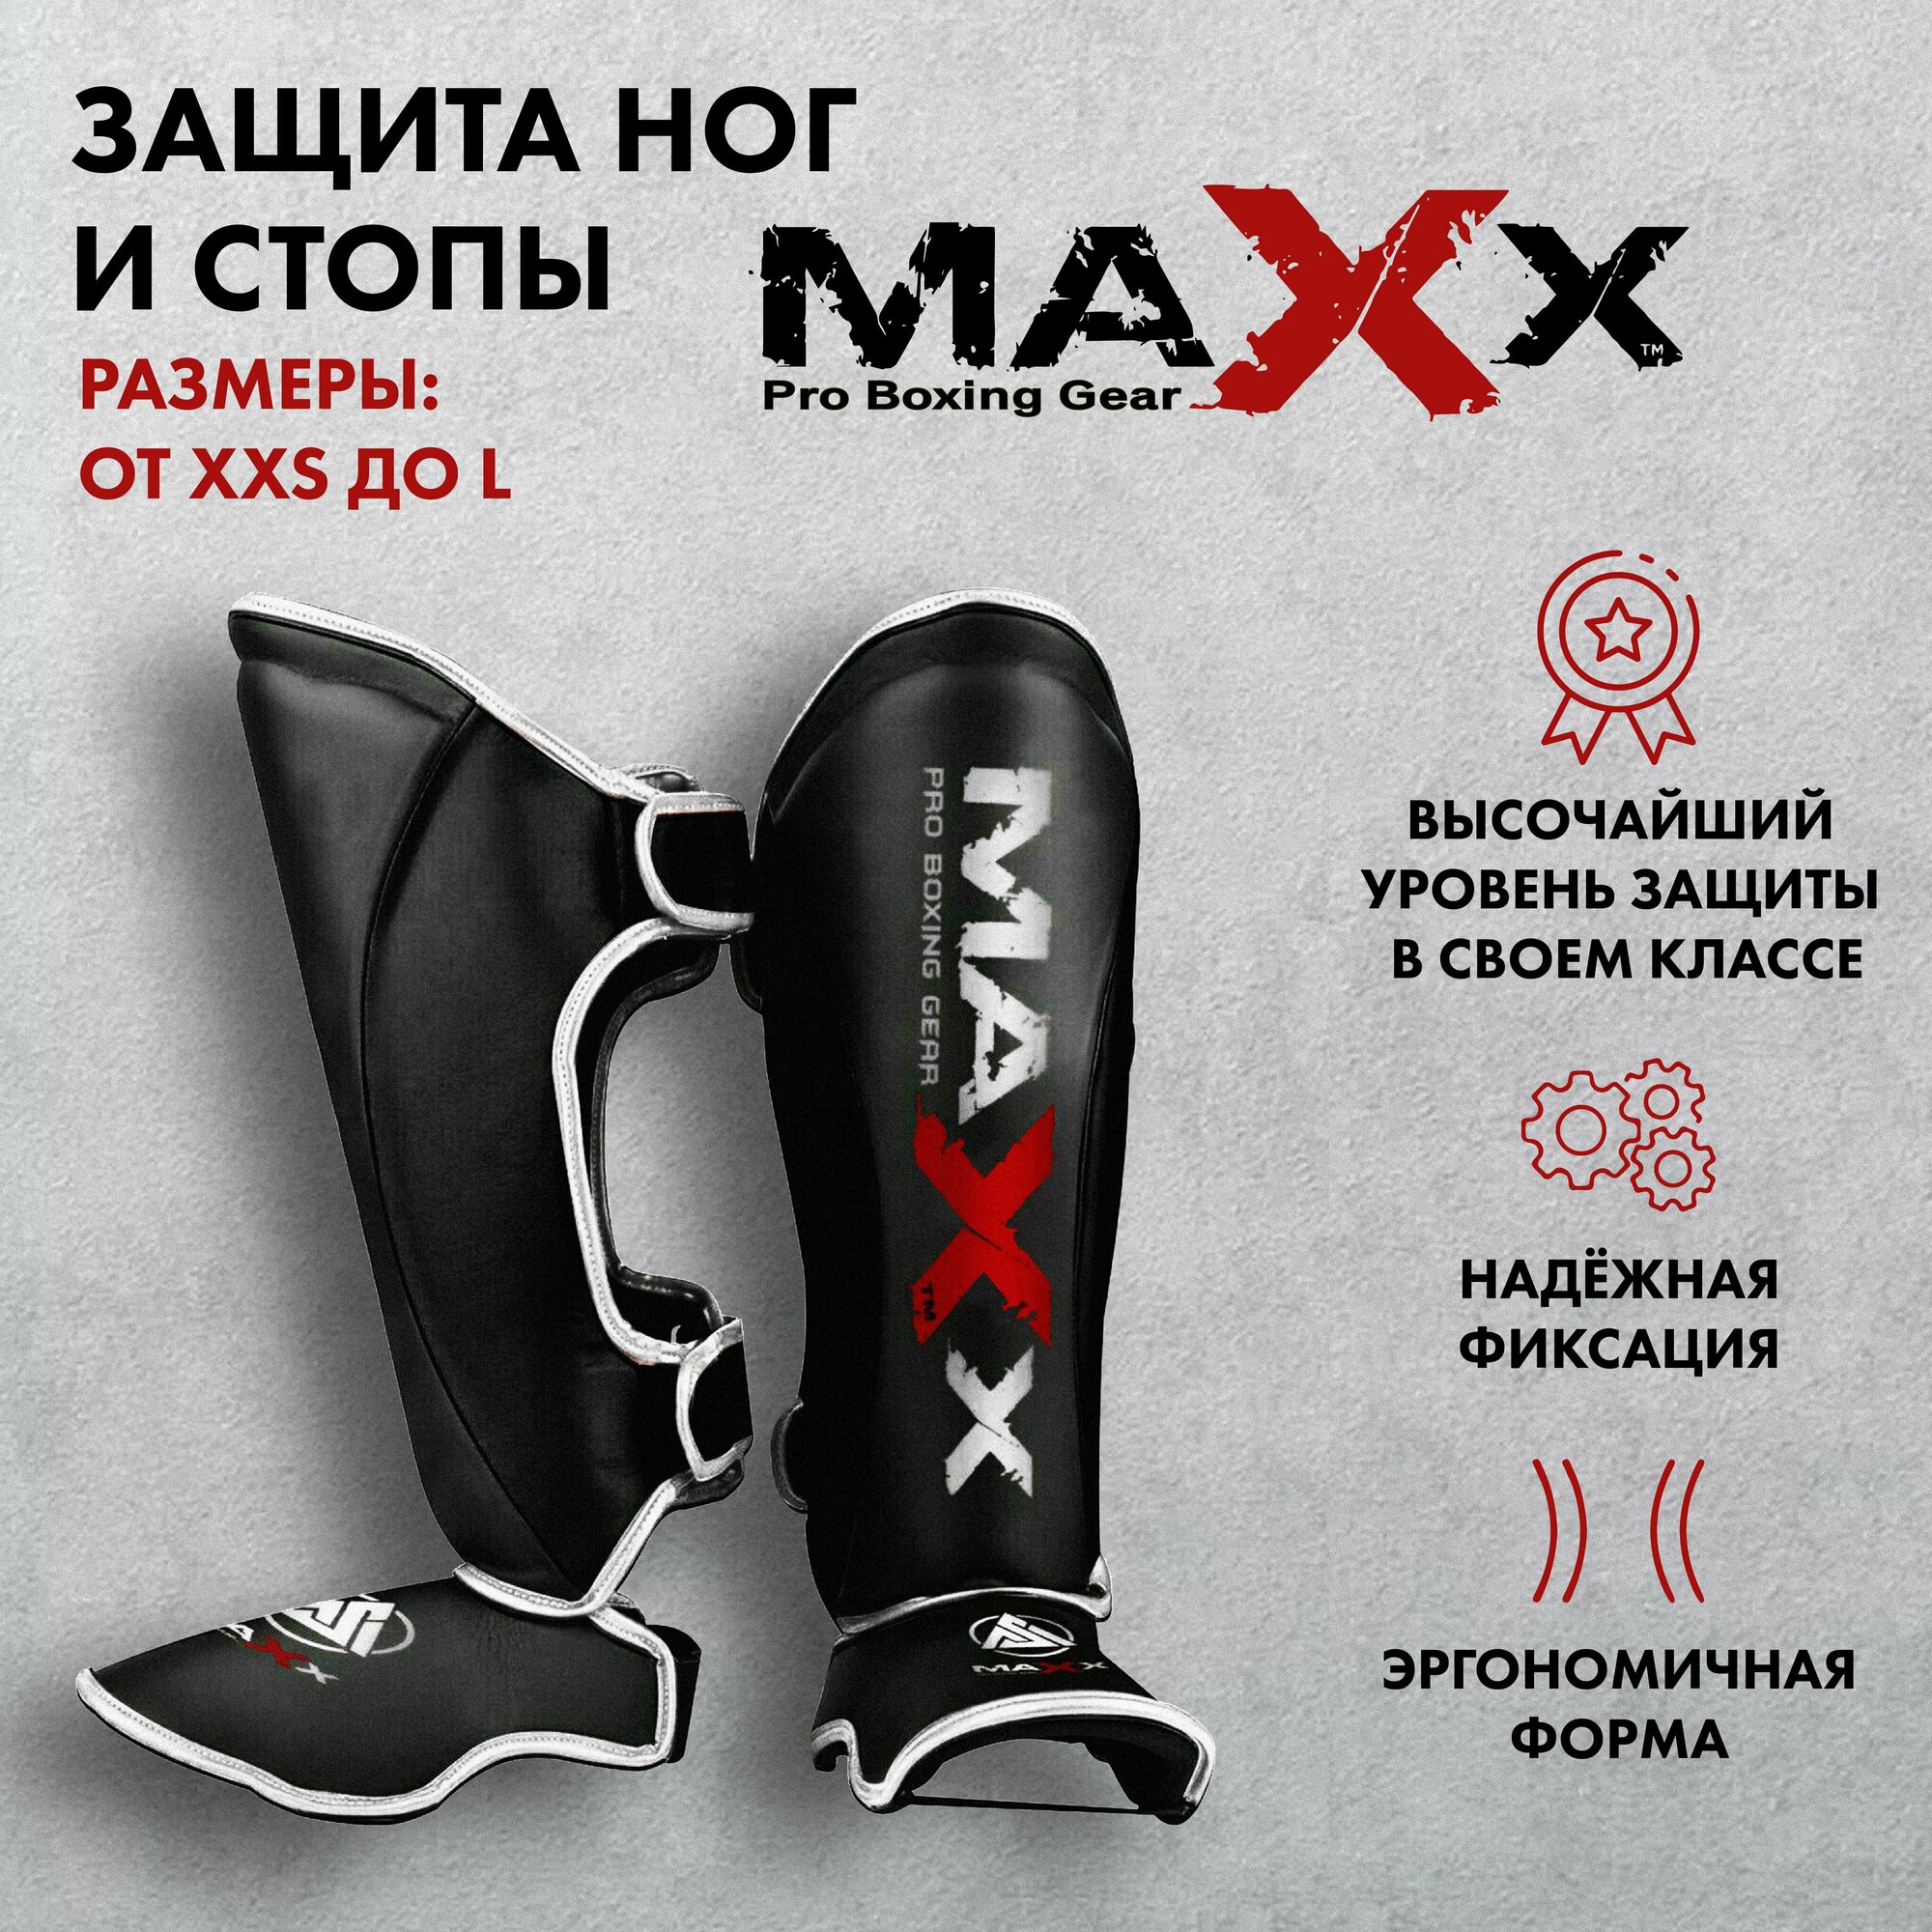 Защита голени и стопы Agon Pro Maxx